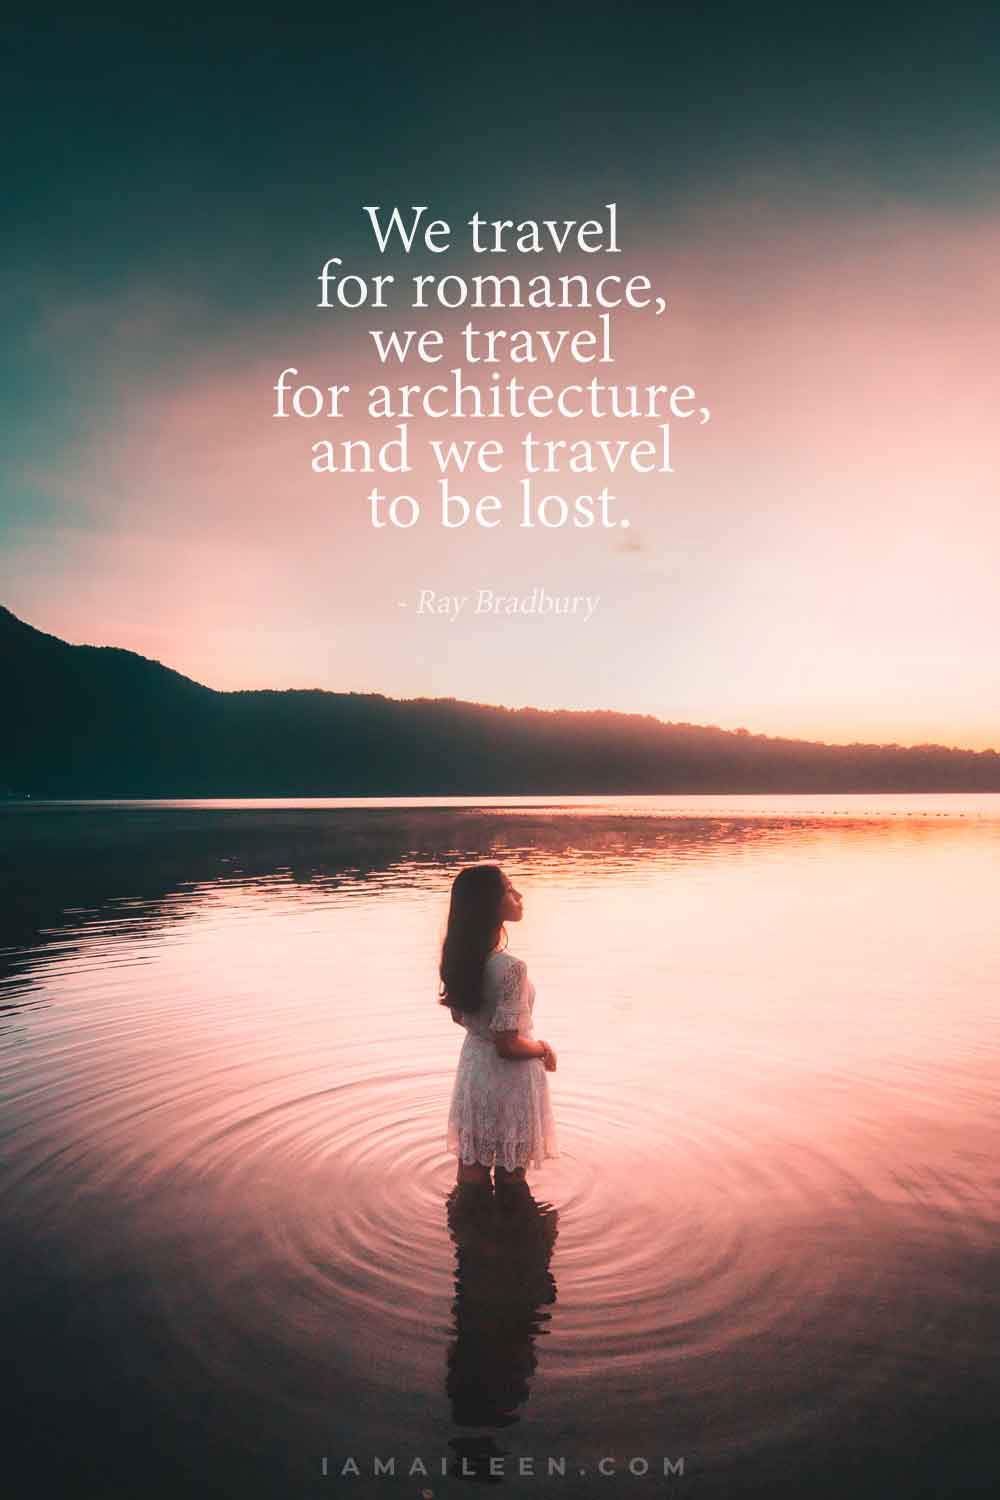 Ray Bradbury Quote About Travel